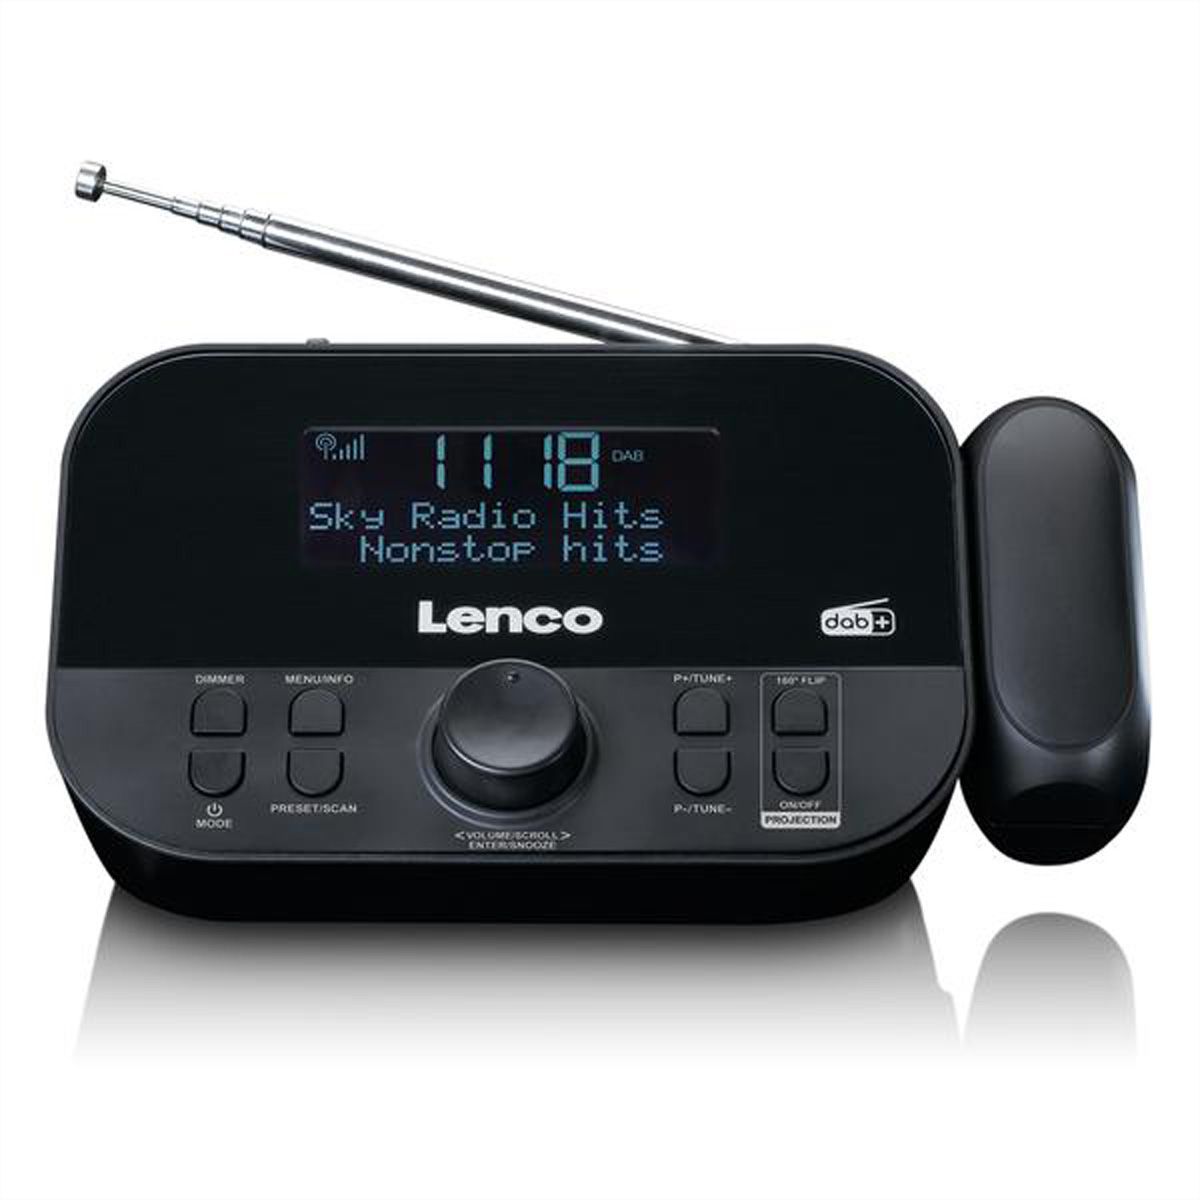 Lenco Radiowecker DAB+ Components - SECOMP Electronic CR-615 FM GmbH